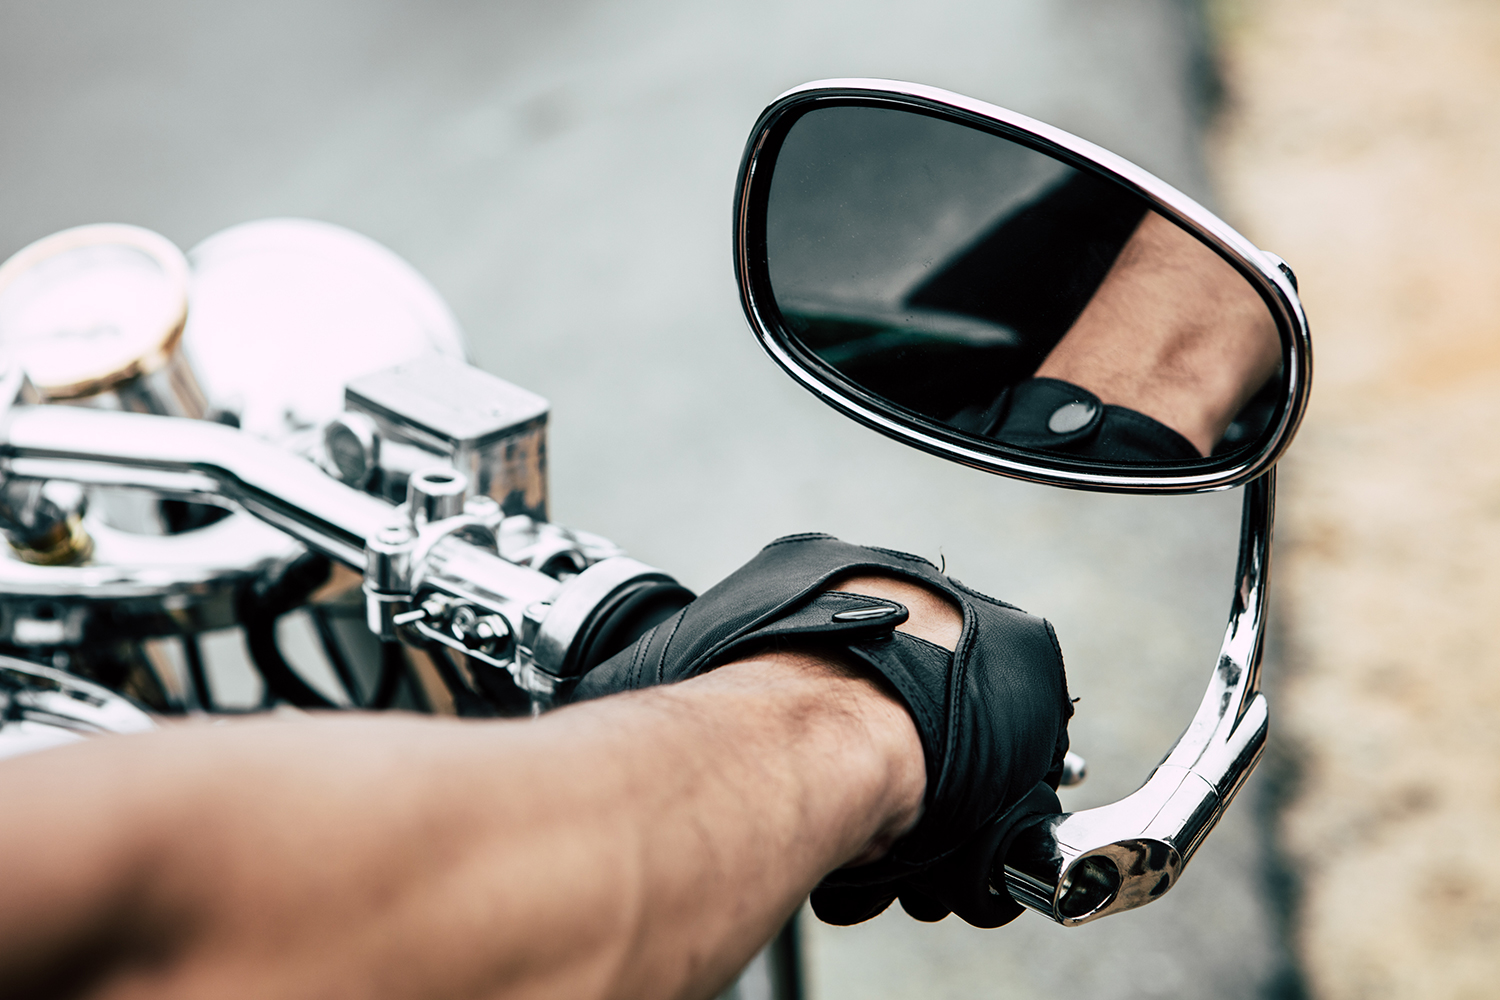 bandit9 arthur merlin royal enfield motorcycle od mirror